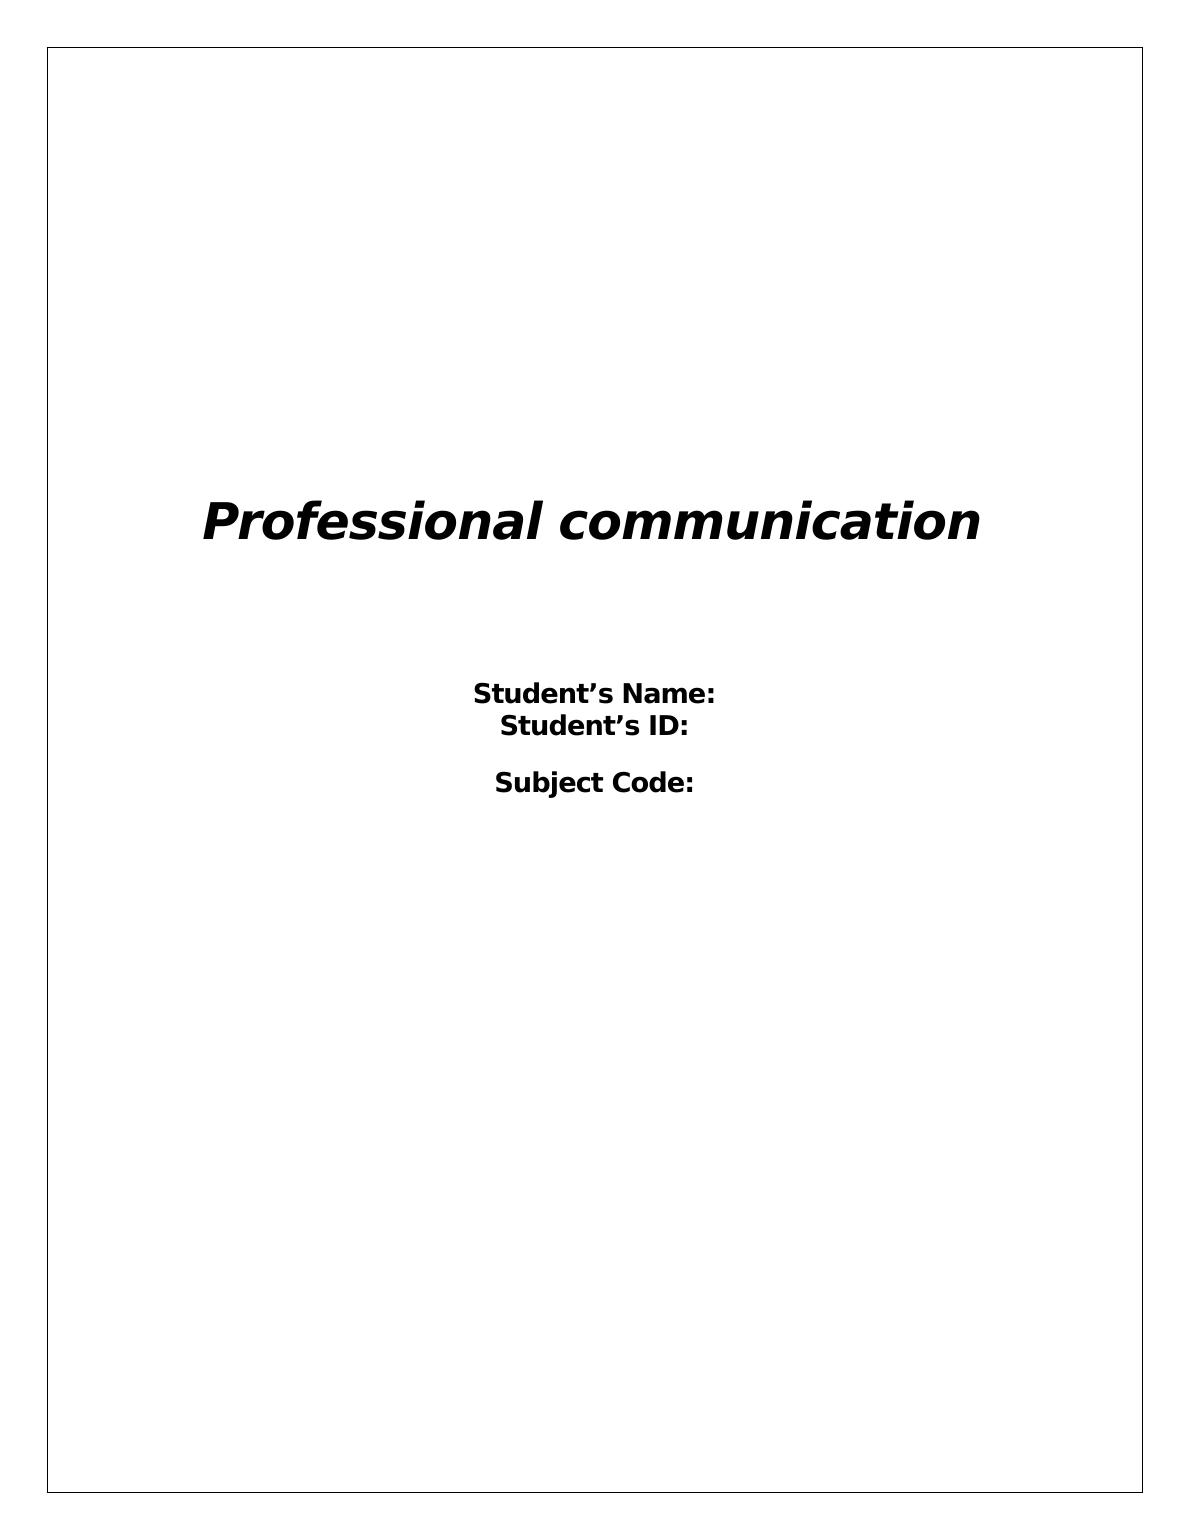 Professional Communication_1